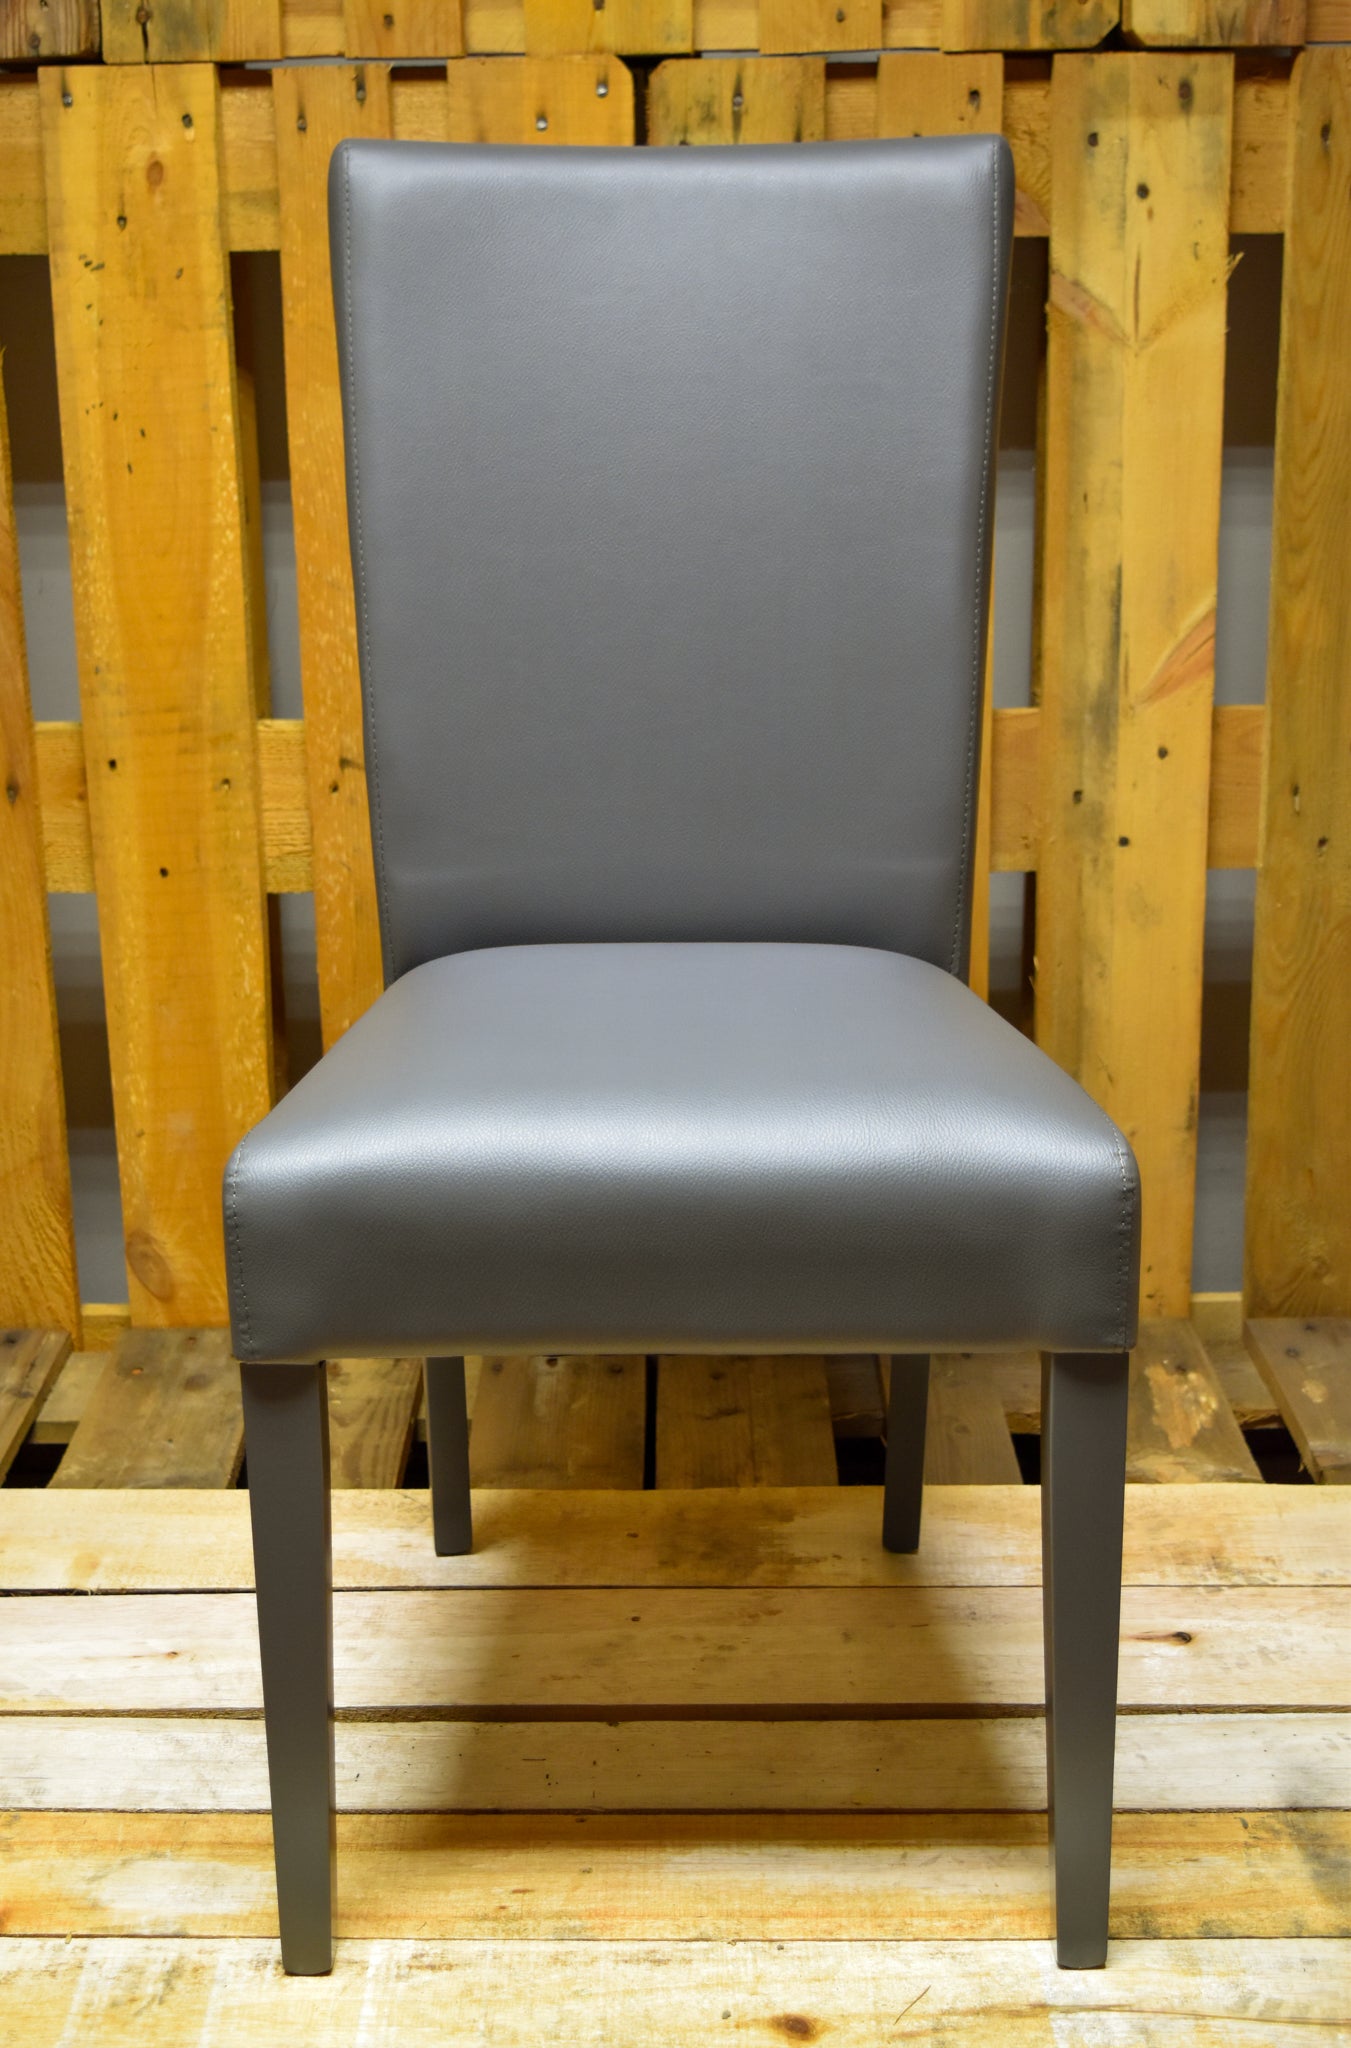 Stock sedie outlet modello 46 imbottita finta pelle colore grigio scuro